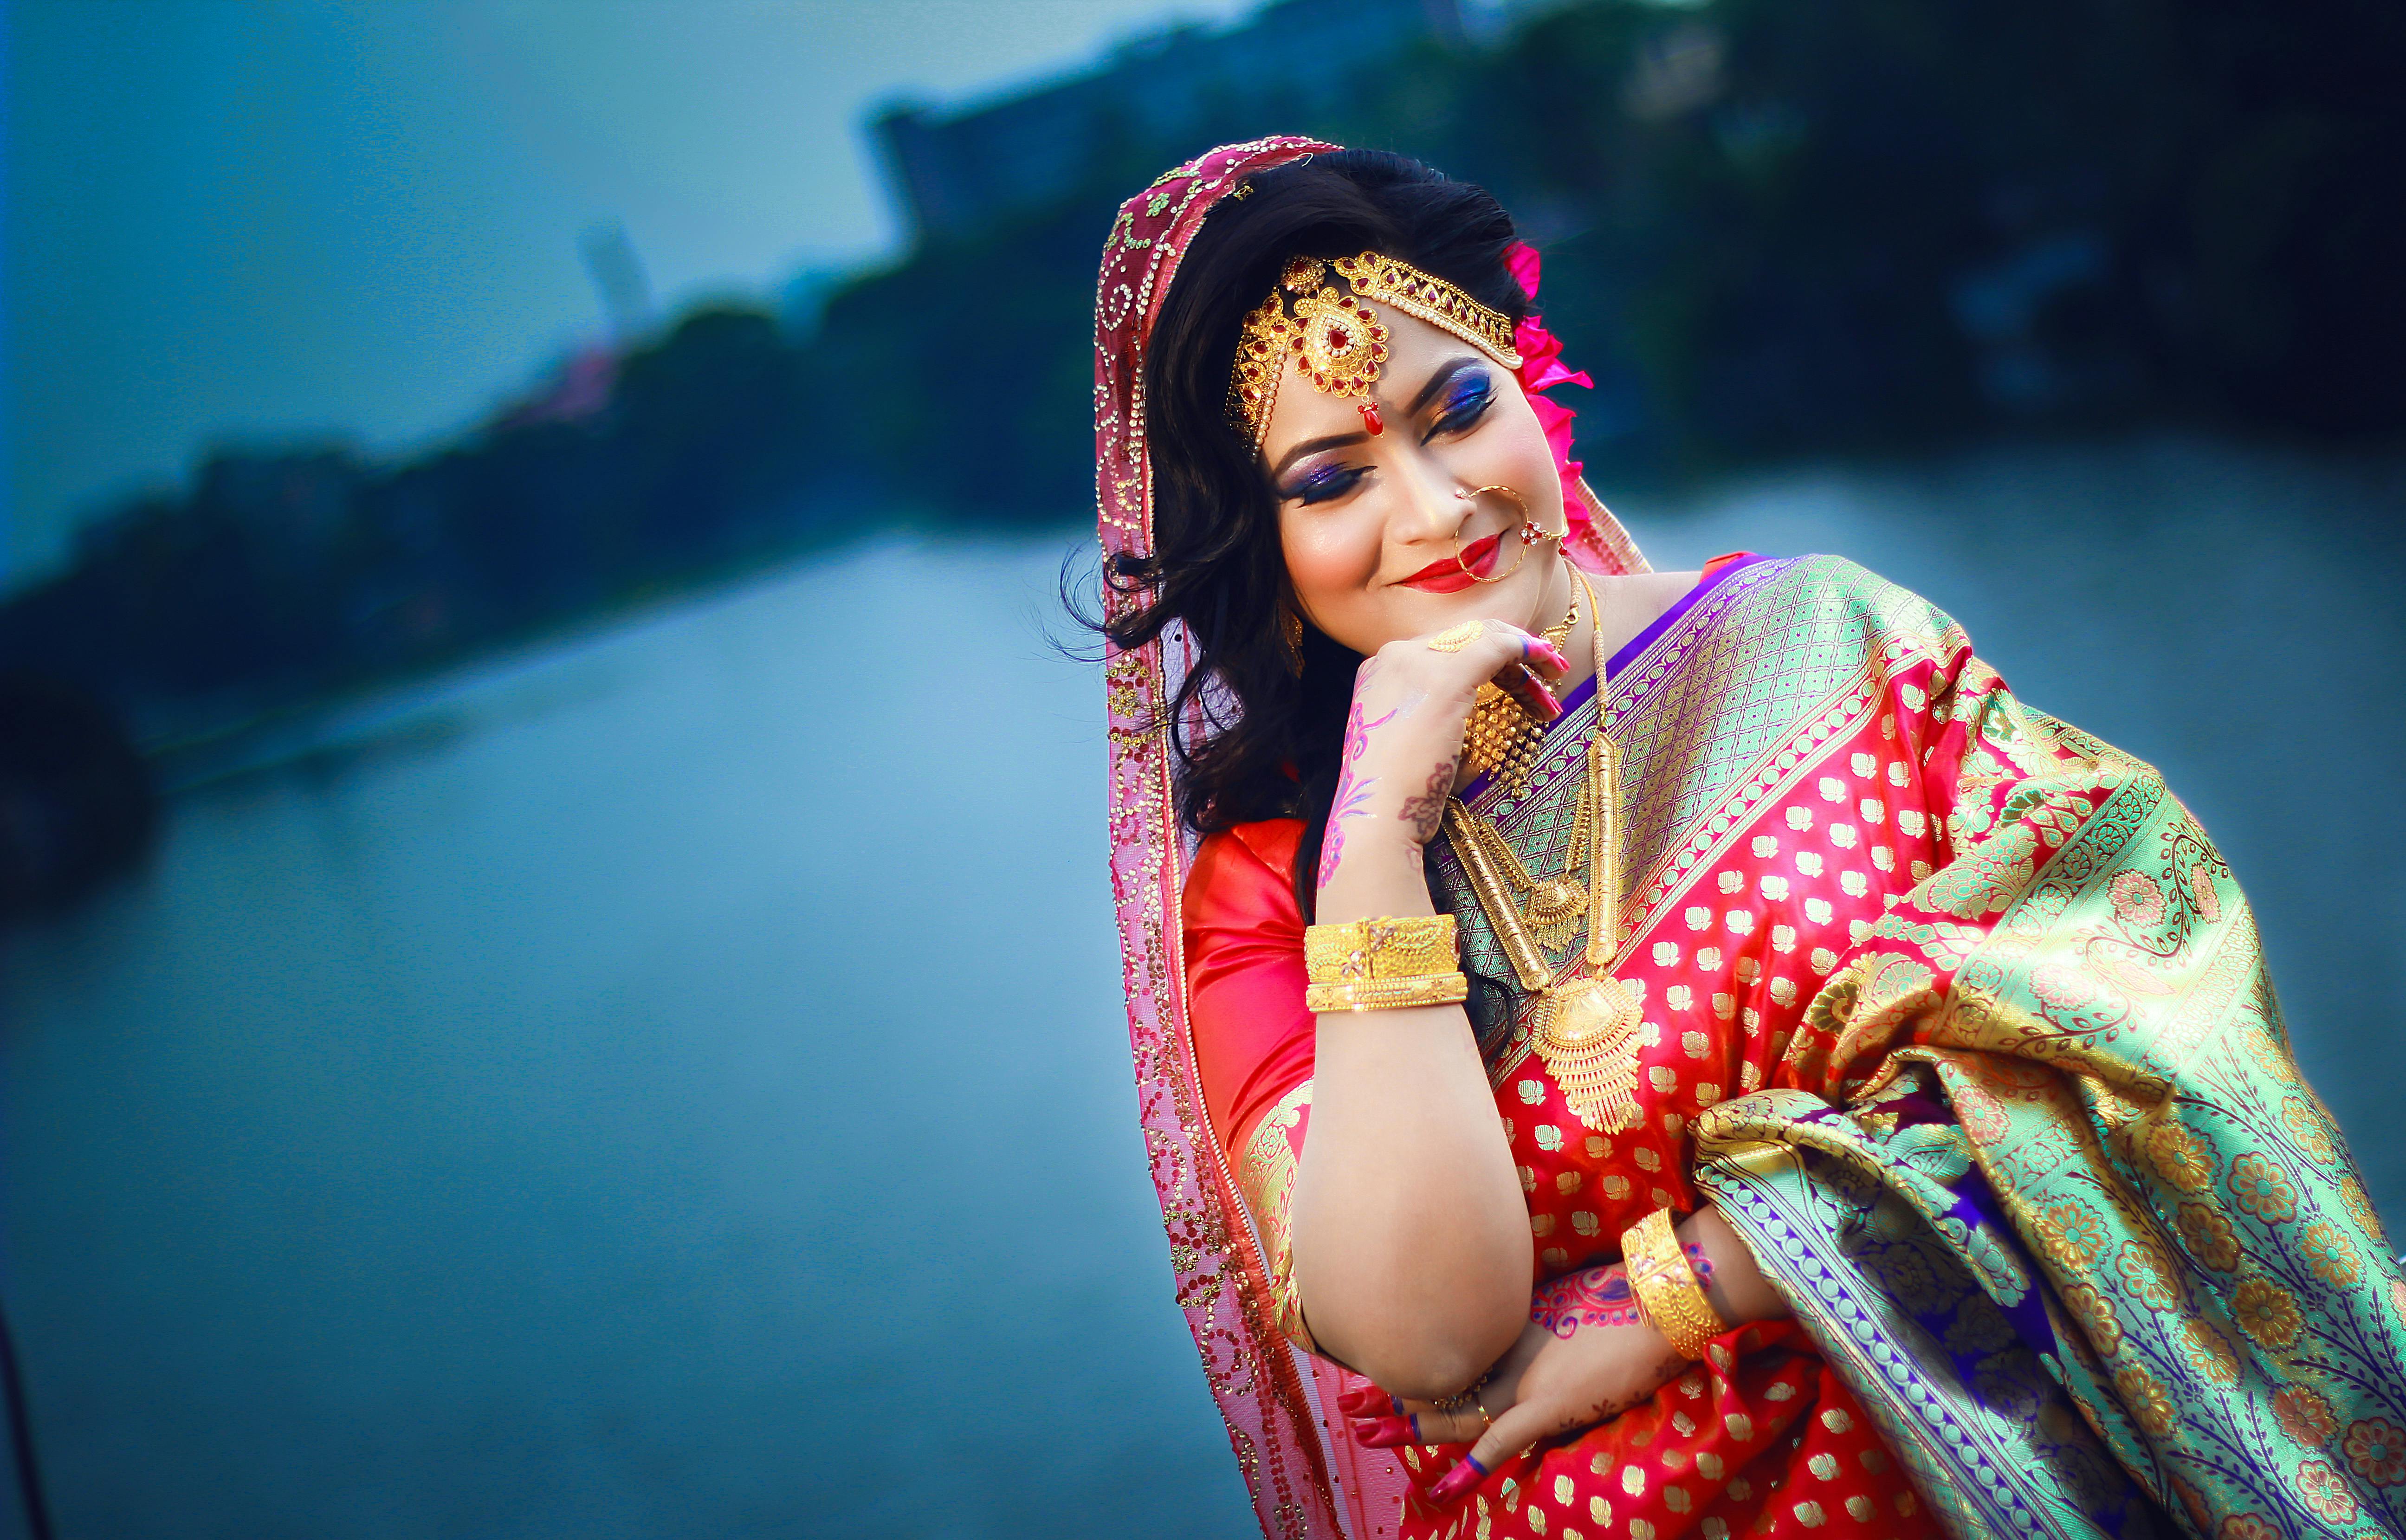 Dazzling Chooda and Kalire Shots of Beautiful Indian Brides